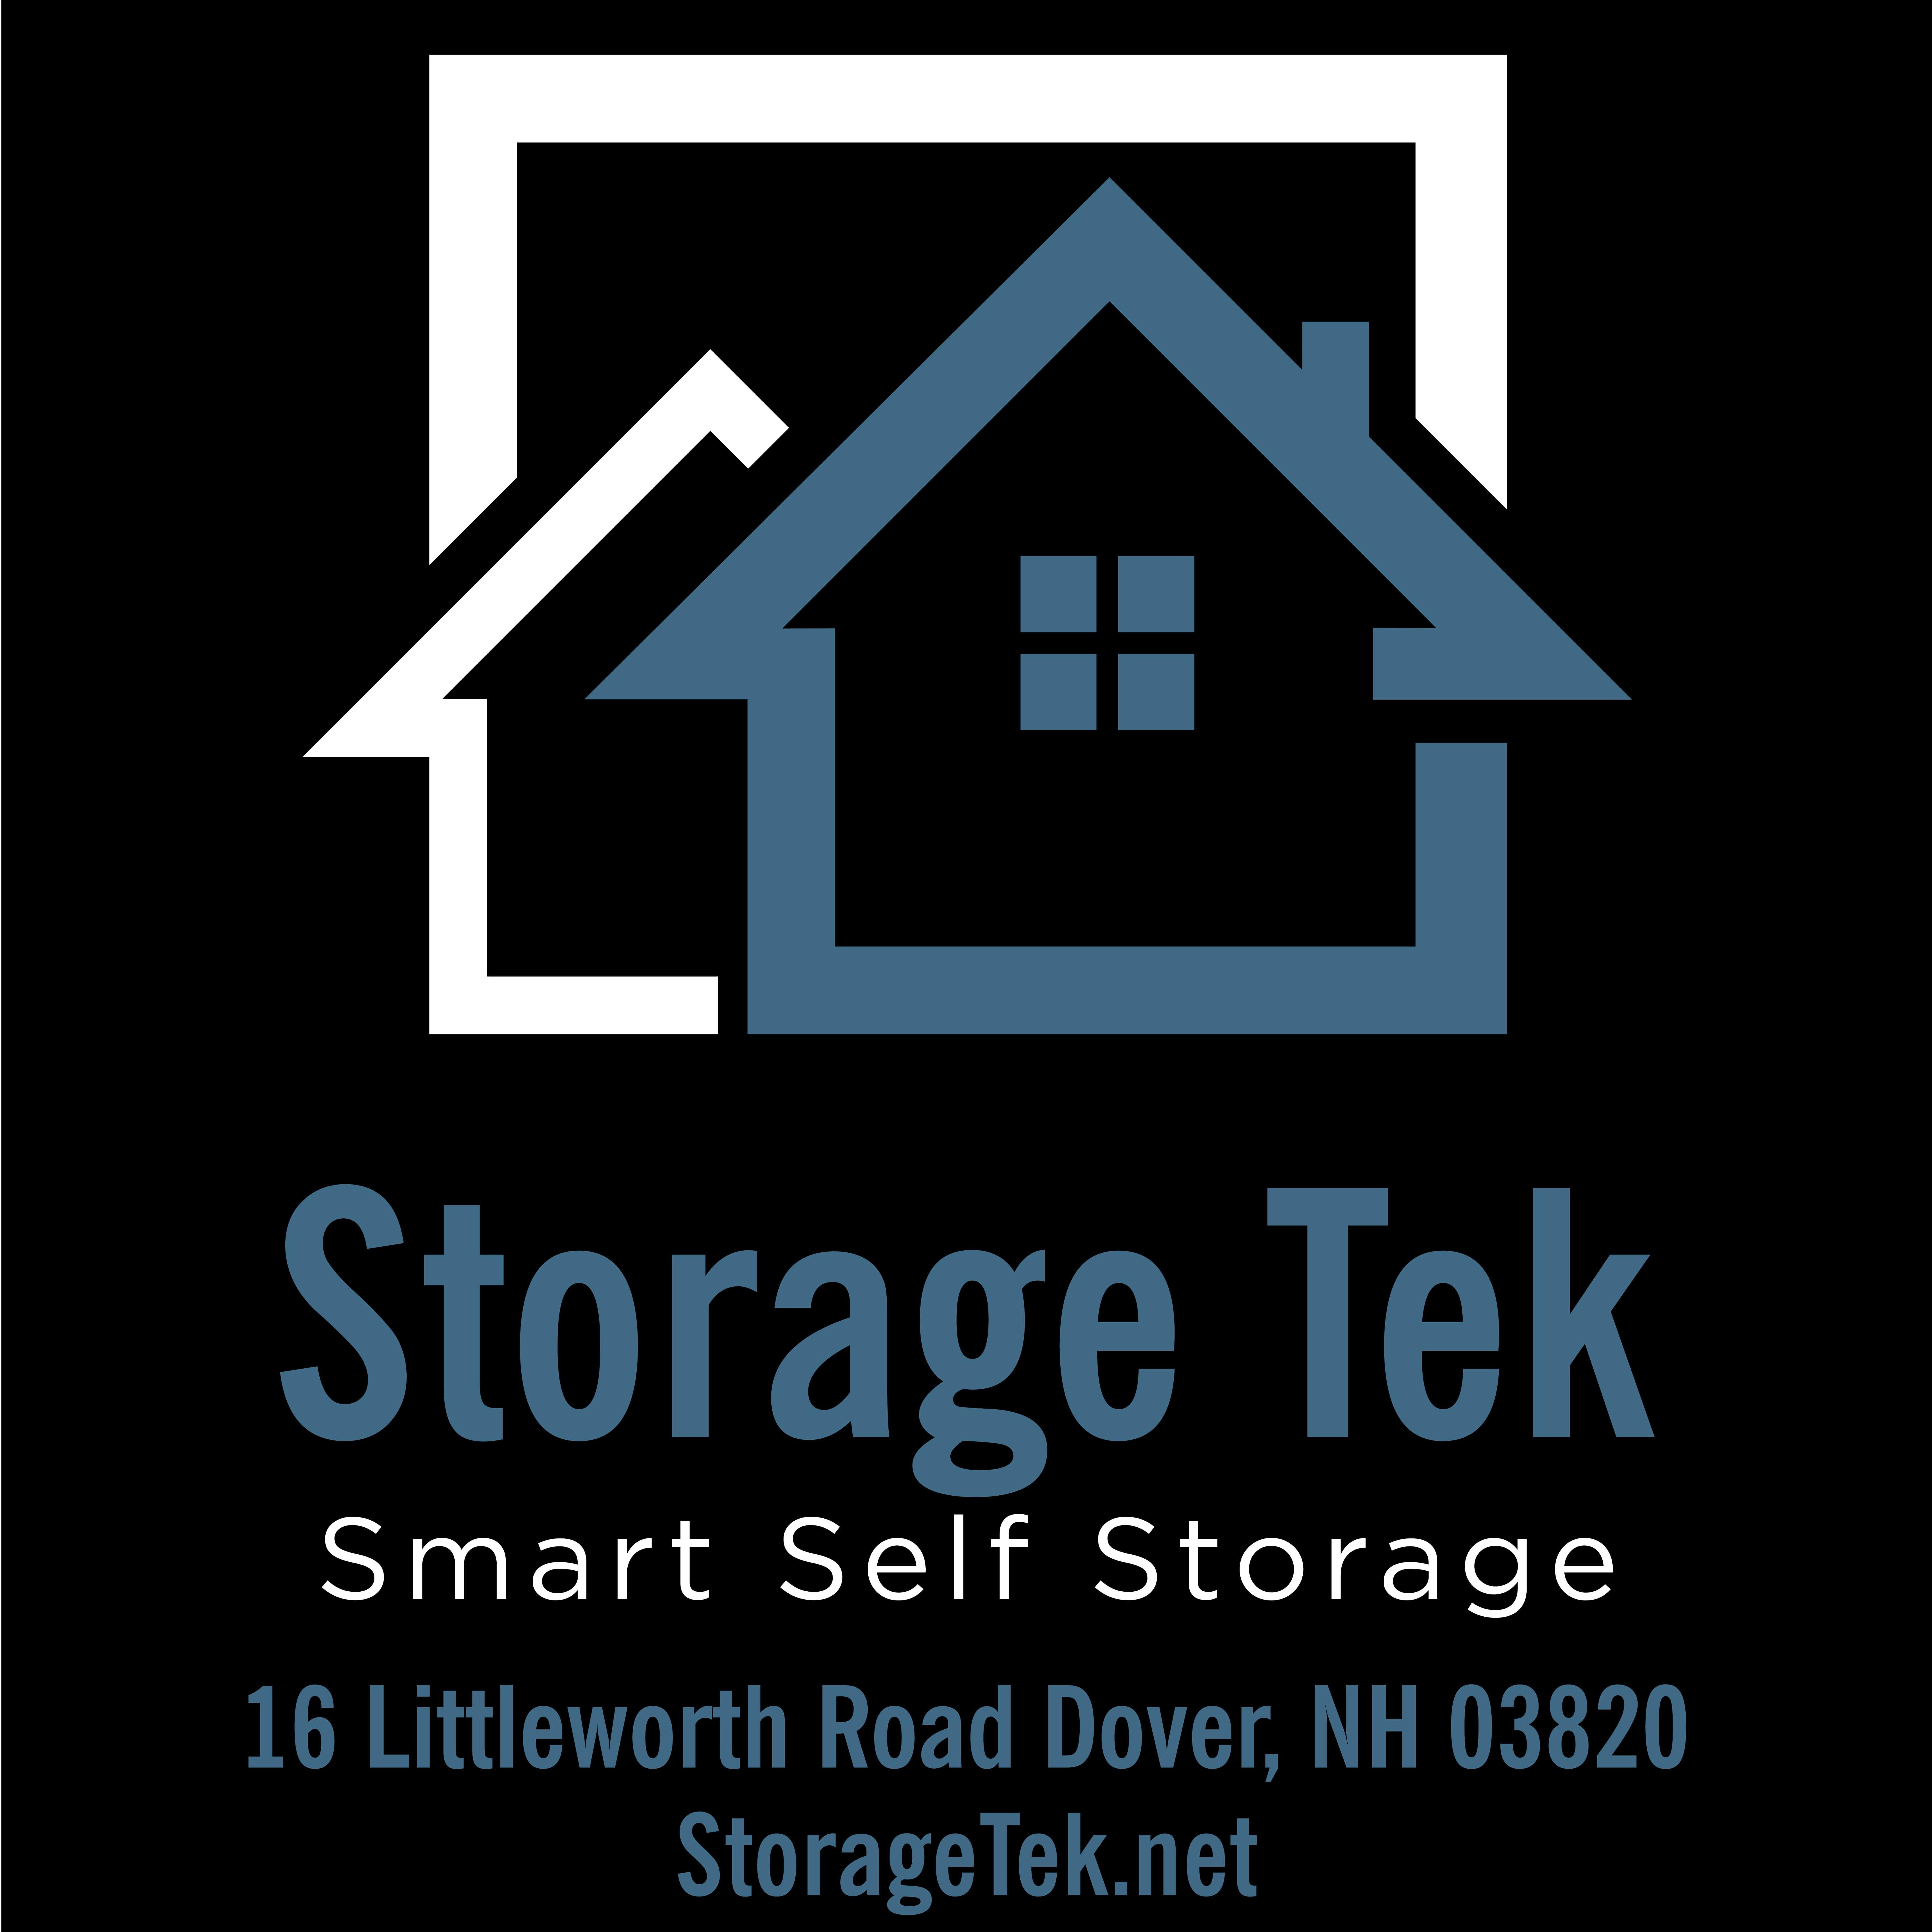 Storagetek- Smart Self Storage